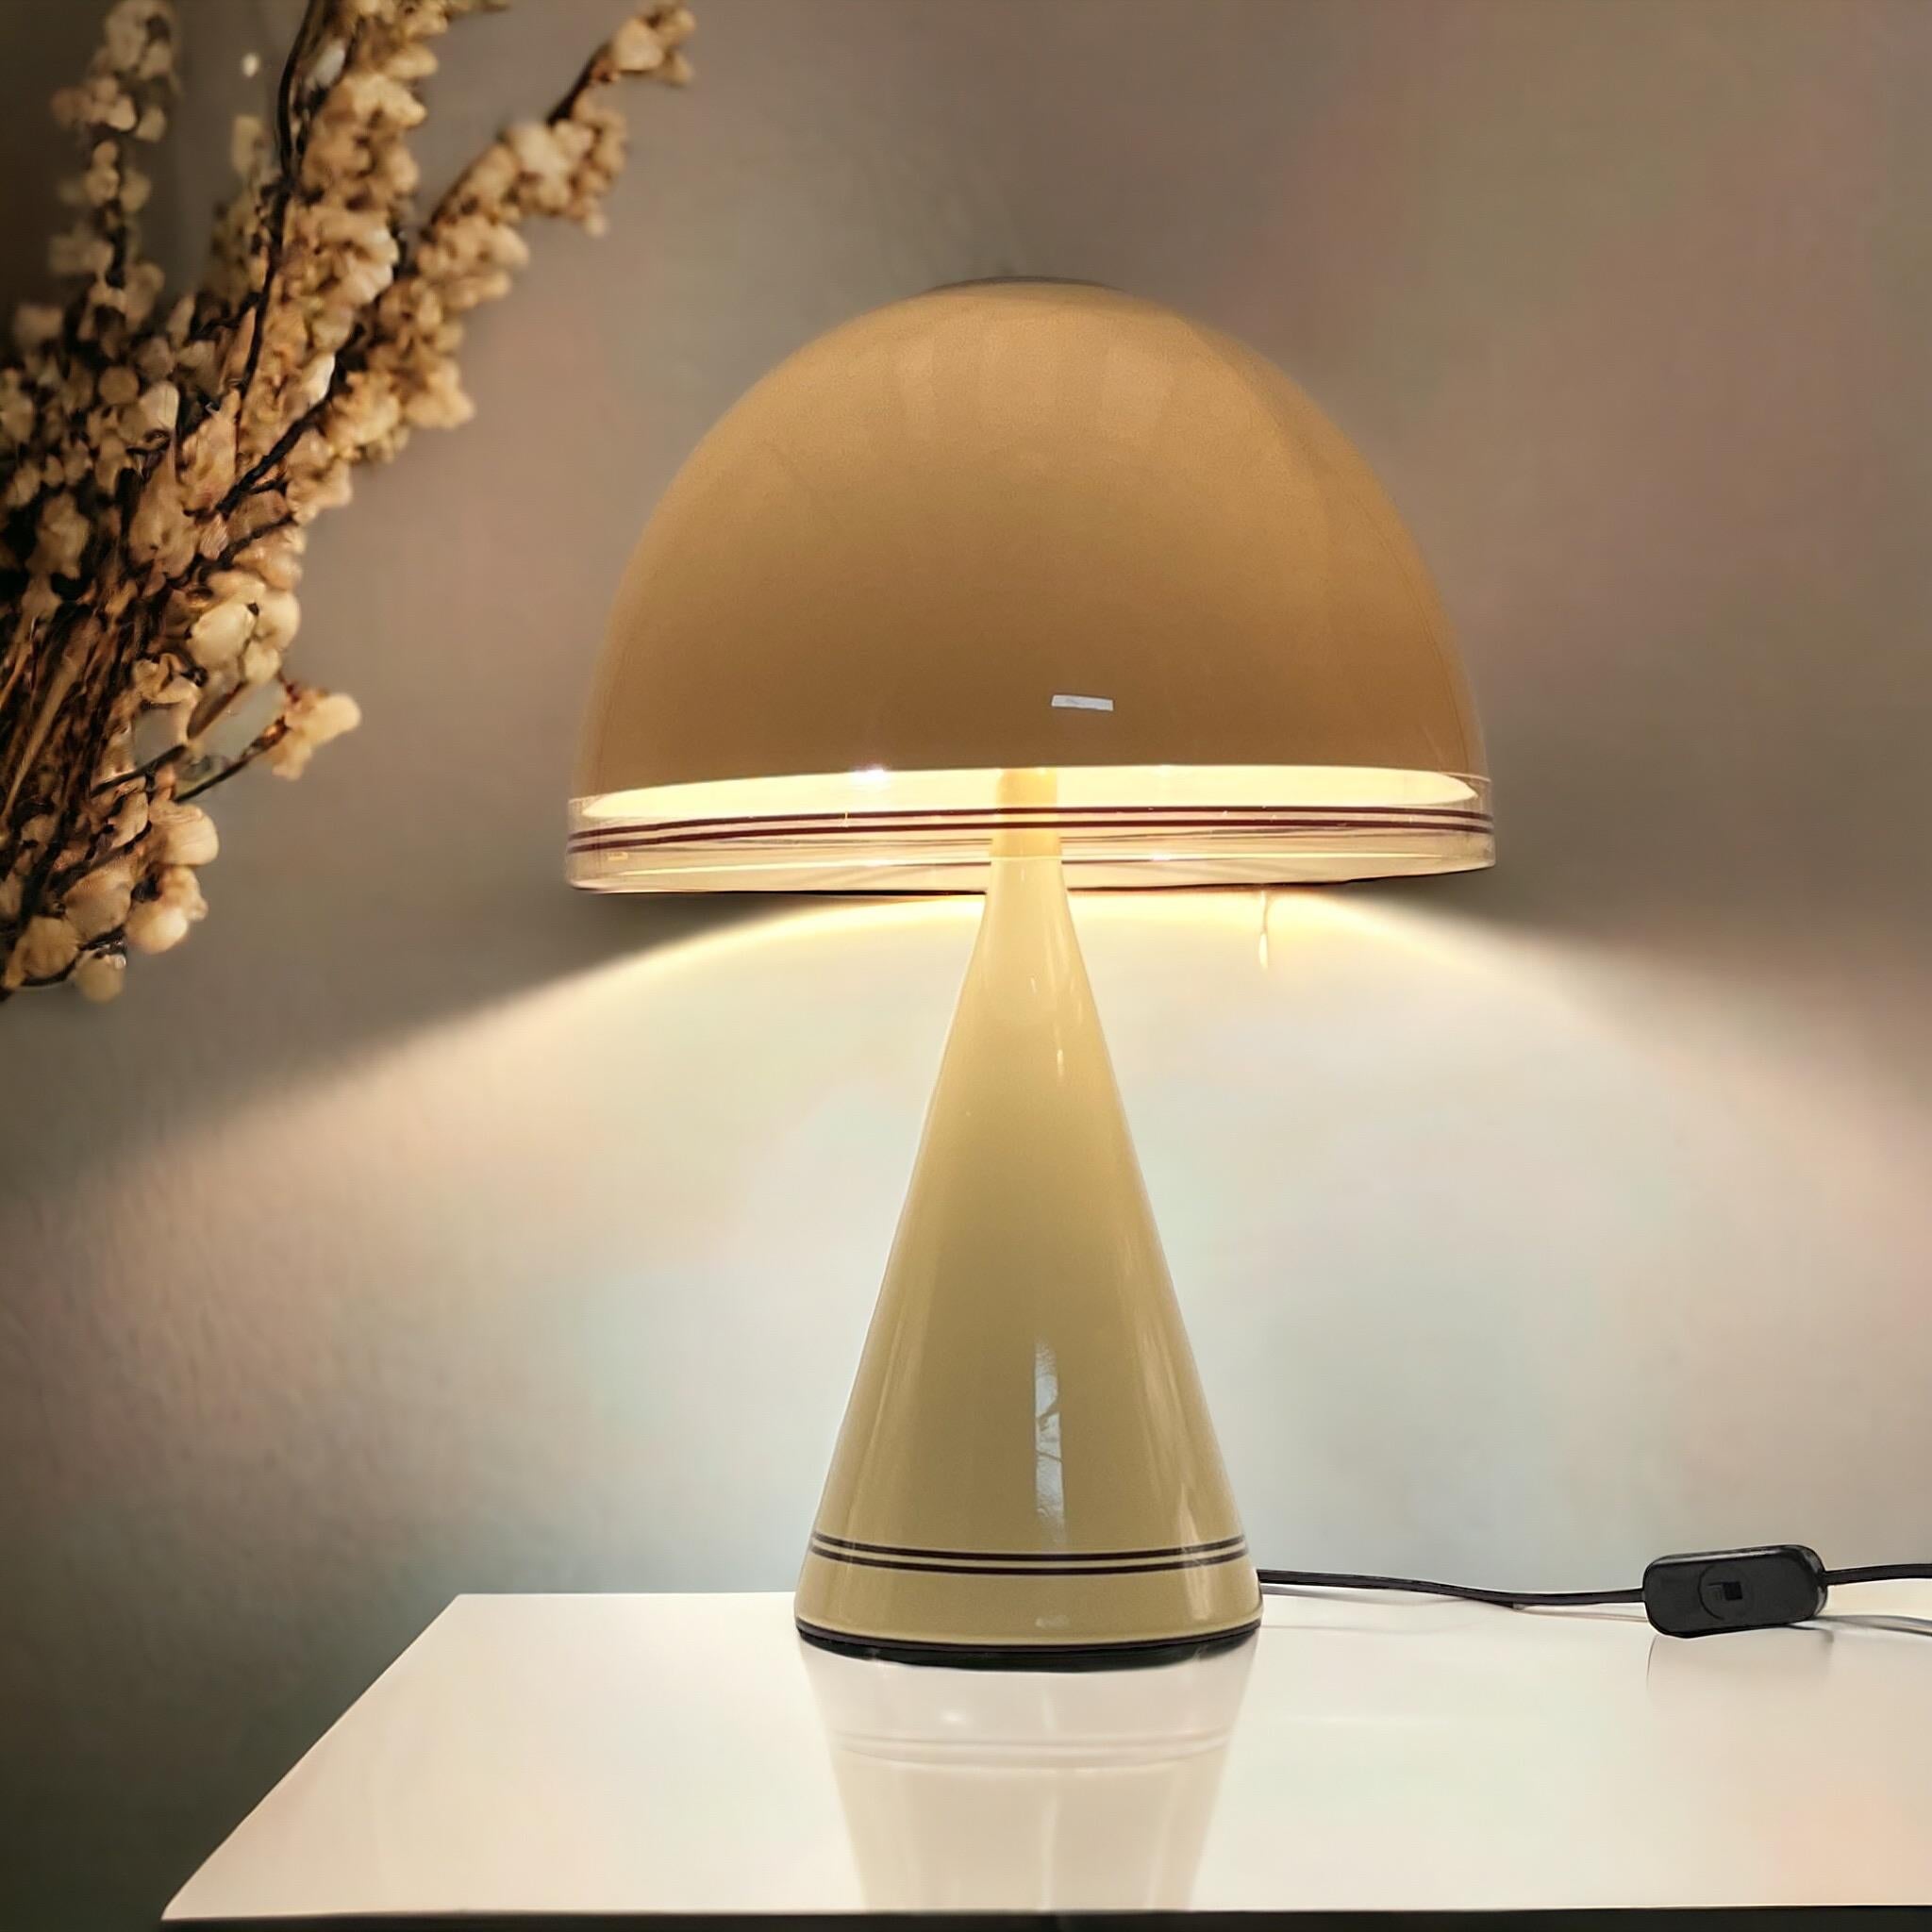 Late 20th Century Iconic Mushroom 70s Lamp ‘Baobab’ by iGuzzini - Italian Space Age Iconic Lamp